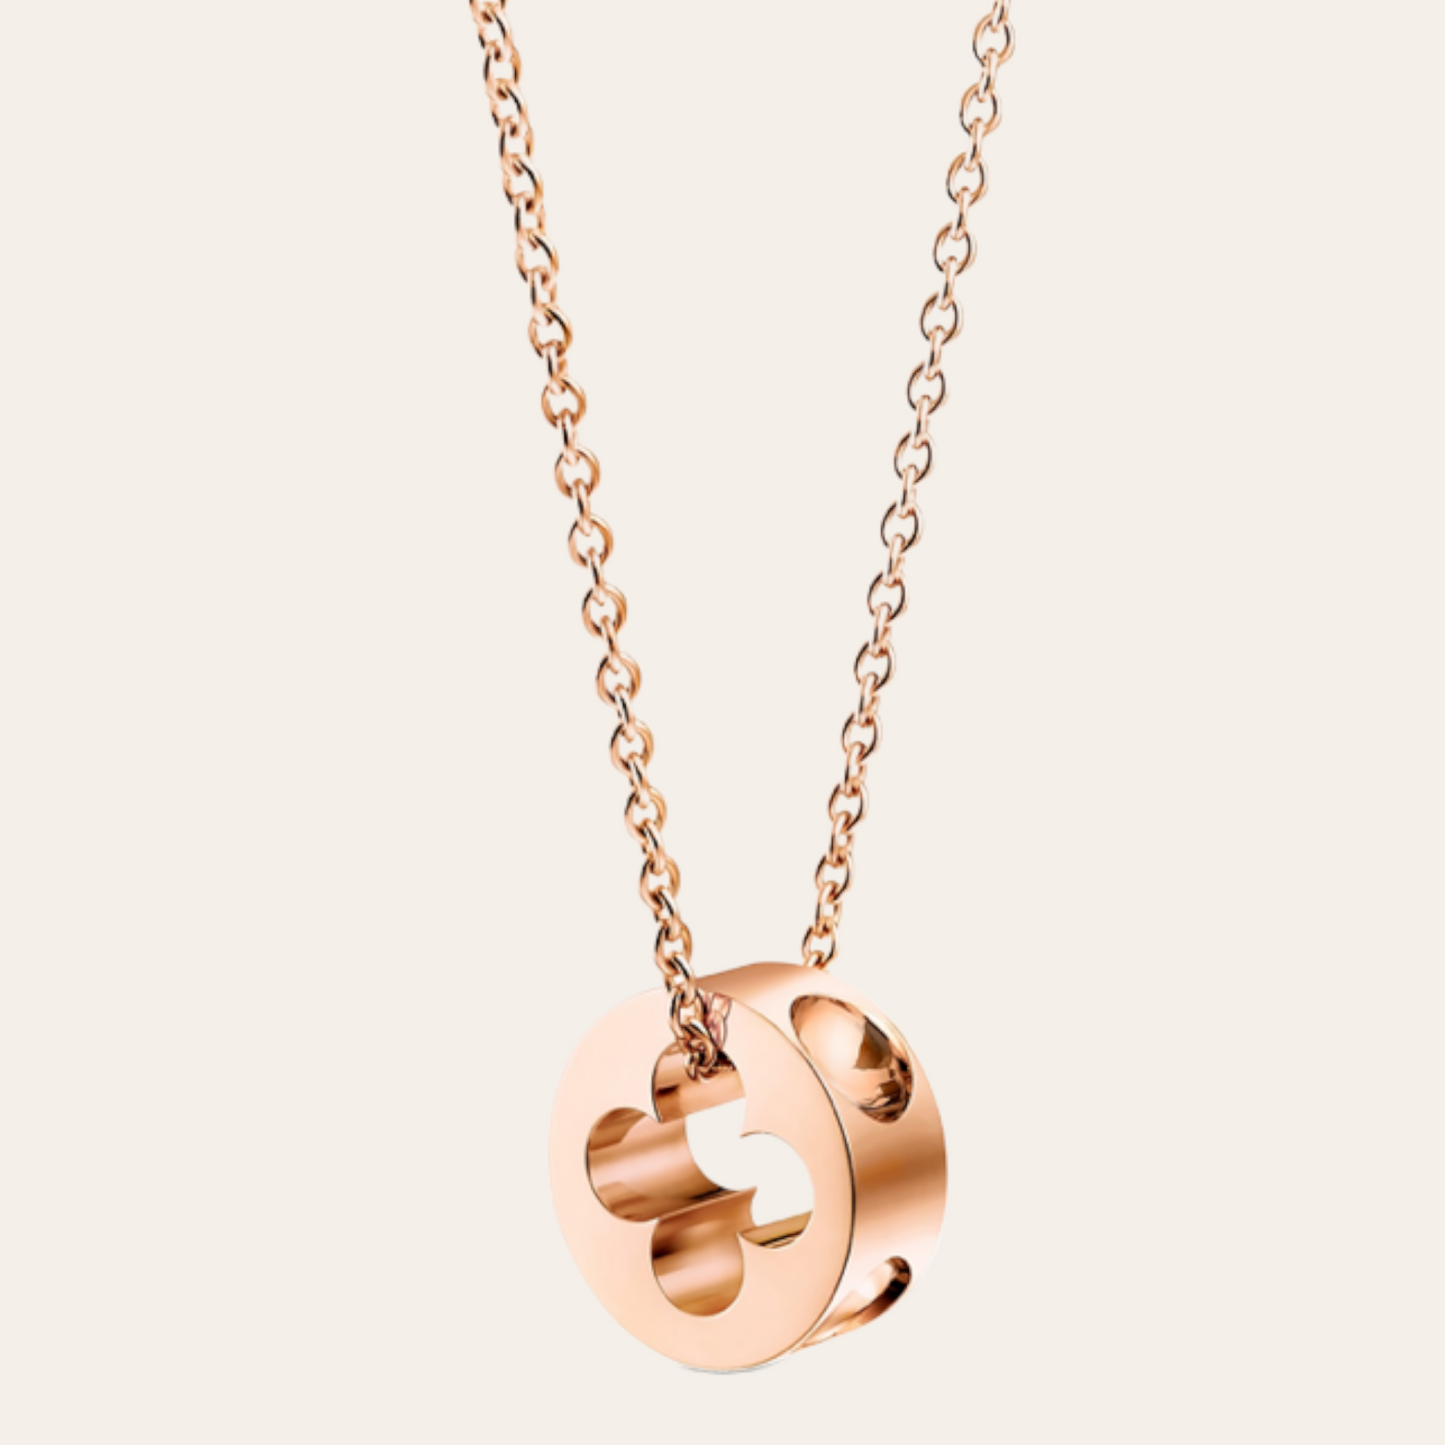 Louis Vuitton Empreinte Necklace Pink Gold